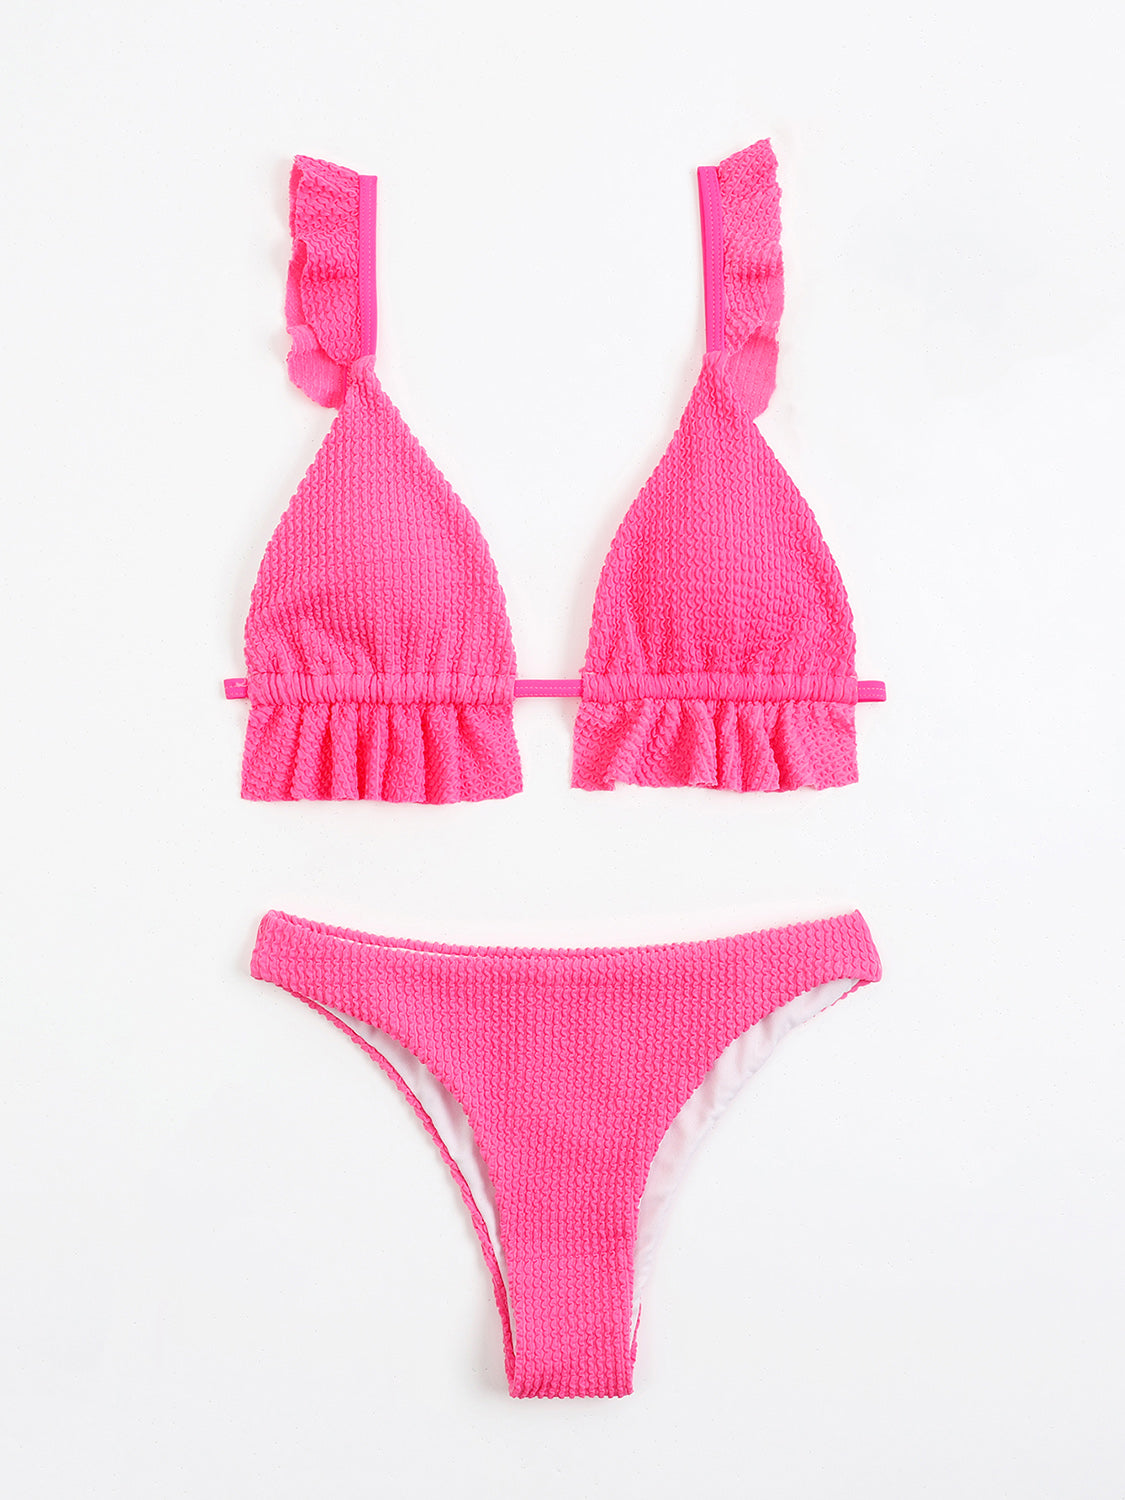 TEEK - Ruffled Textured Wide Strap Two-Piece Bikini Set SWIMWEAR TEEK Trend Fuchsia Pink S 